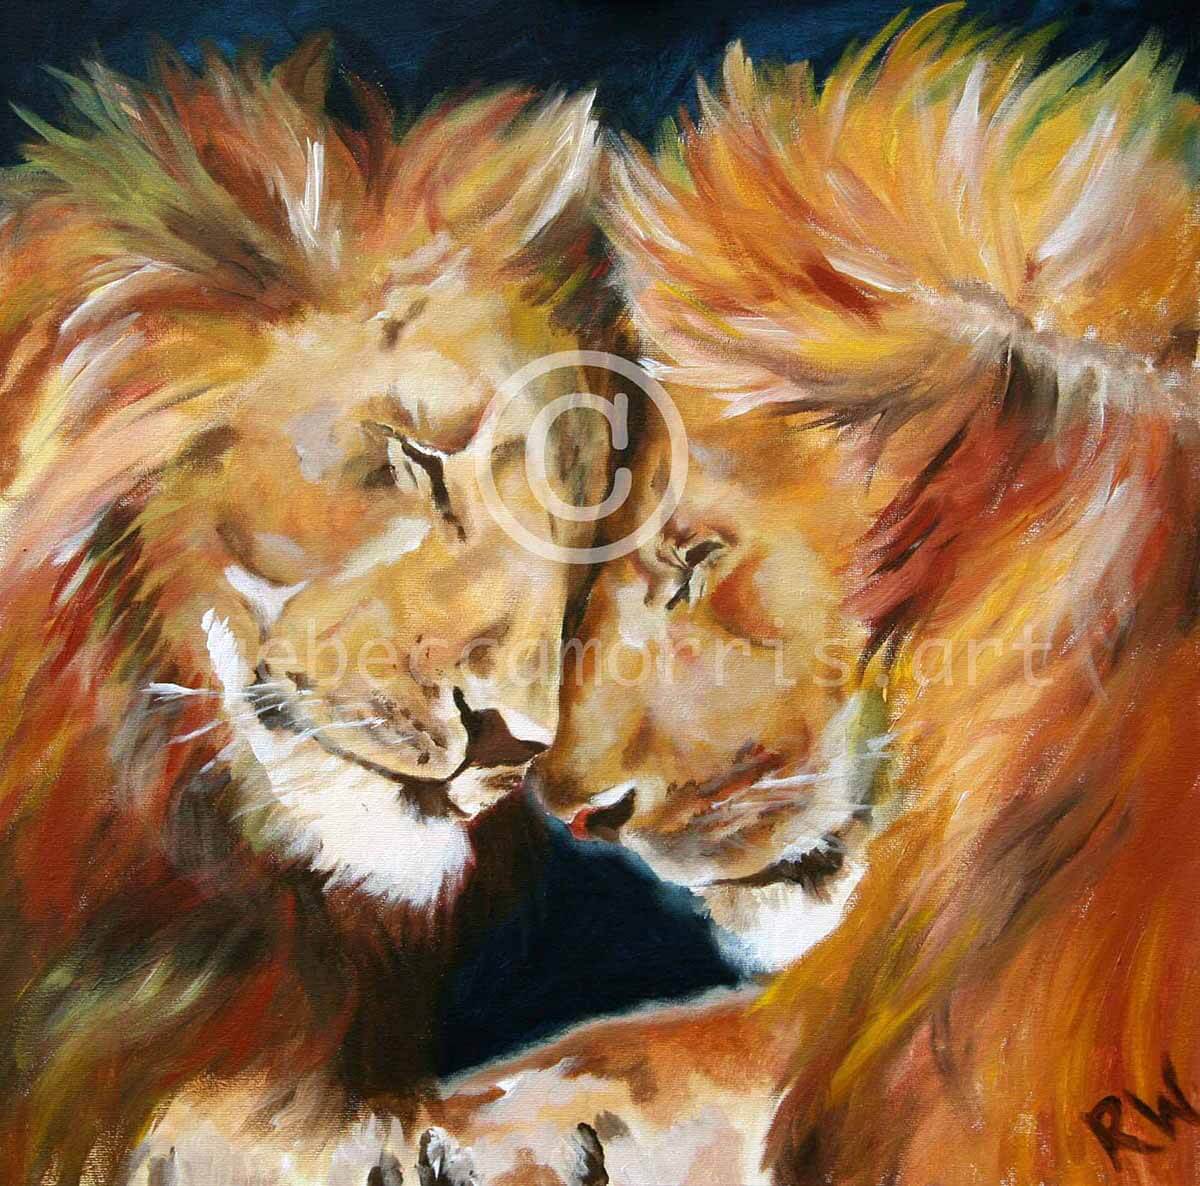 Rebeccamorris Art - 2 Lions